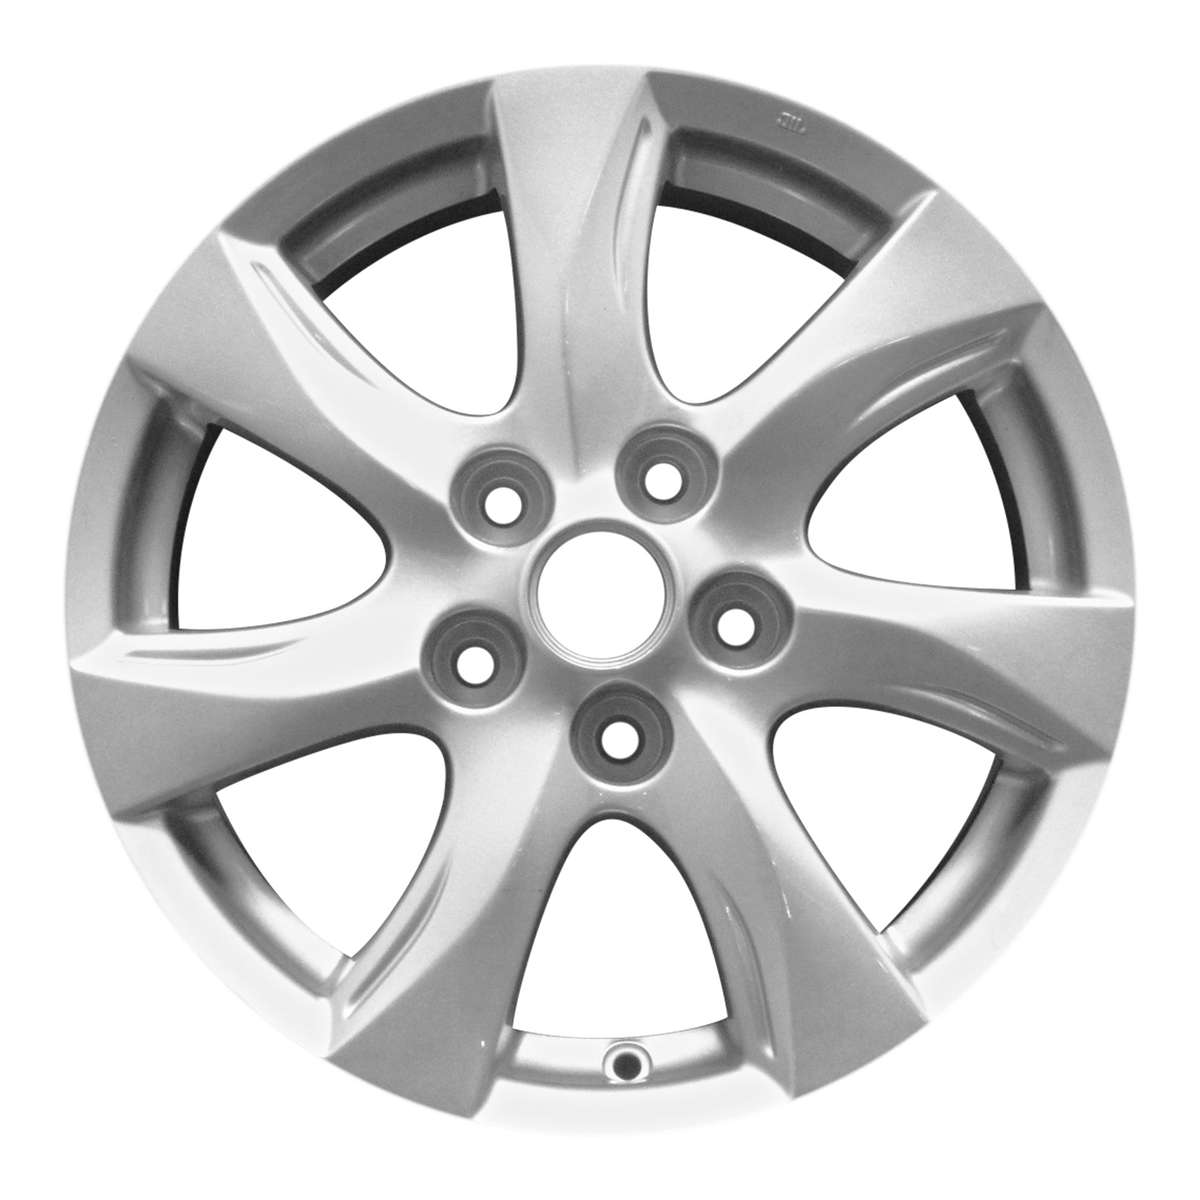 2010 Mazda 3 New 16" Replacement Wheel Rim RW64927S